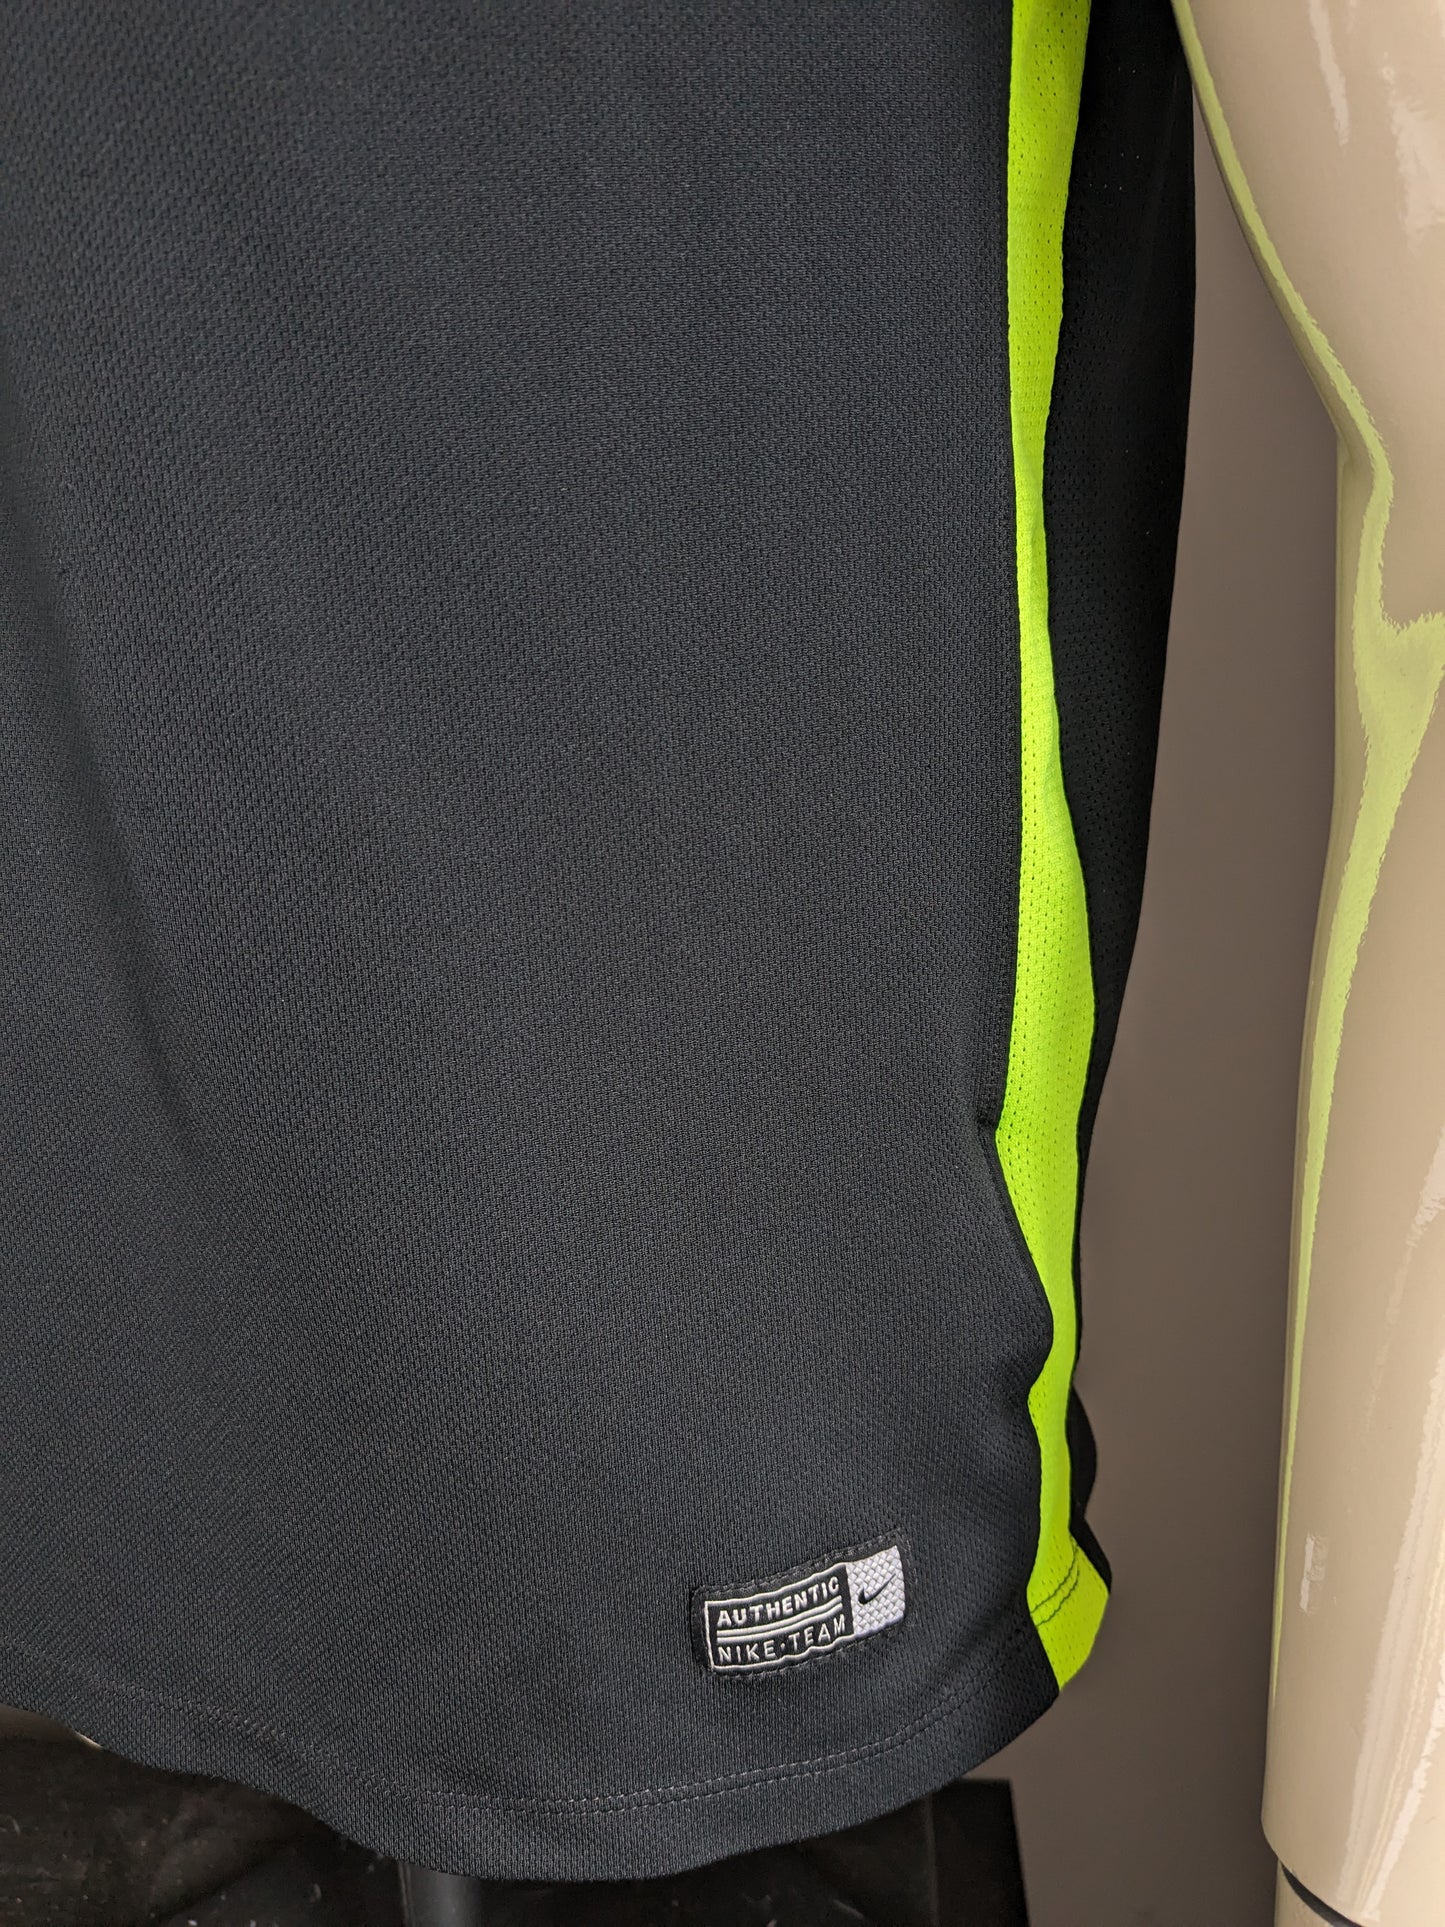 Nike Alemannia sport polo. Zwart Groen gekleurd. Maat L.